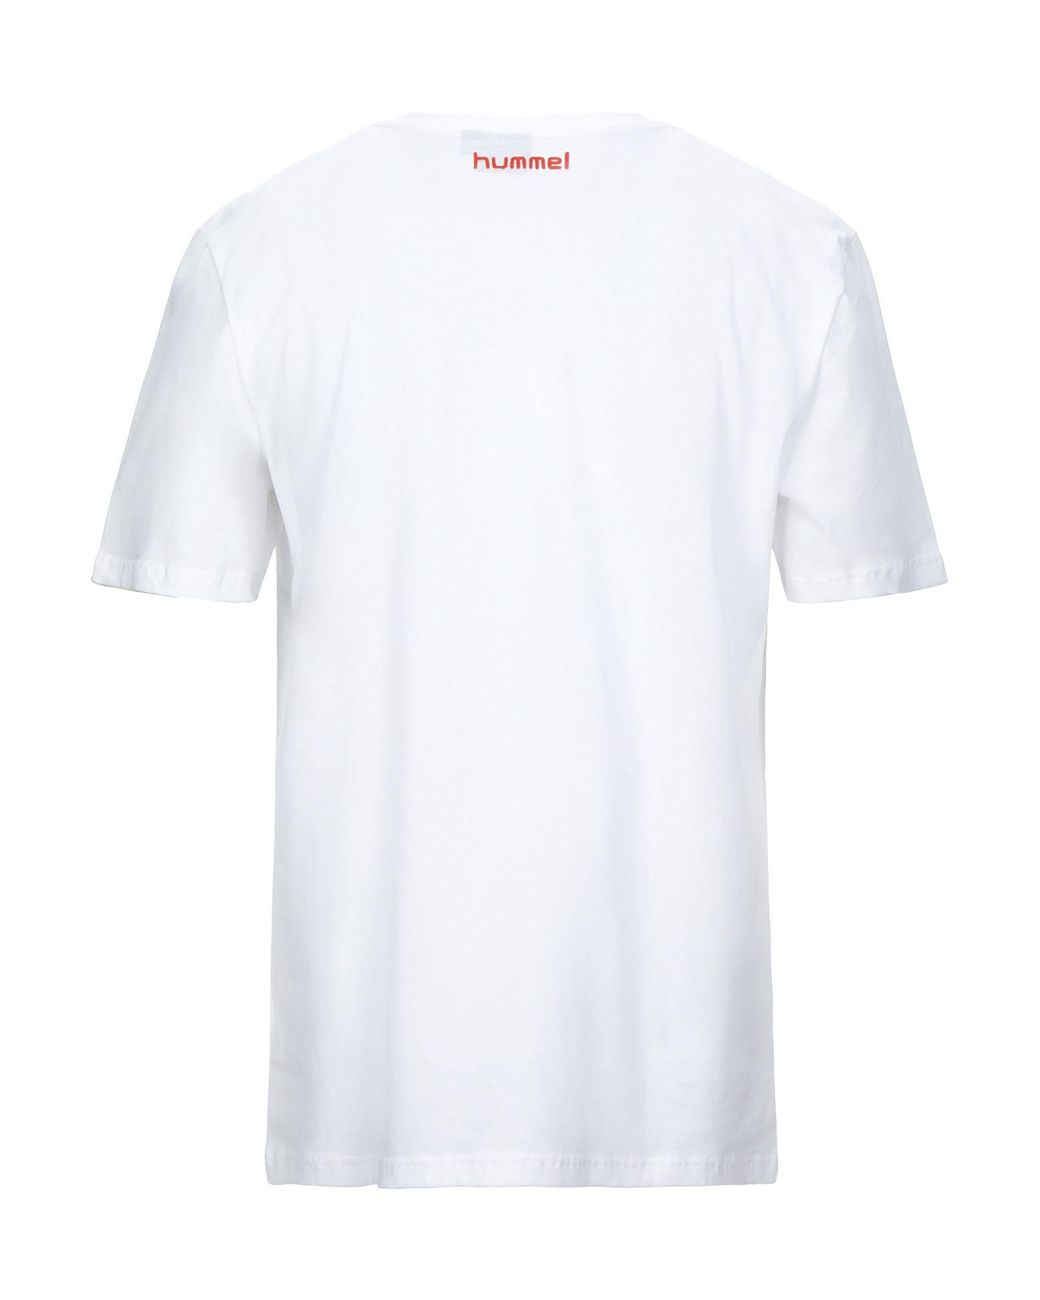 koks Irreplaceable specifikation Hummel Cotton Danish Dynamite T-shirt in White for Men - Lyst